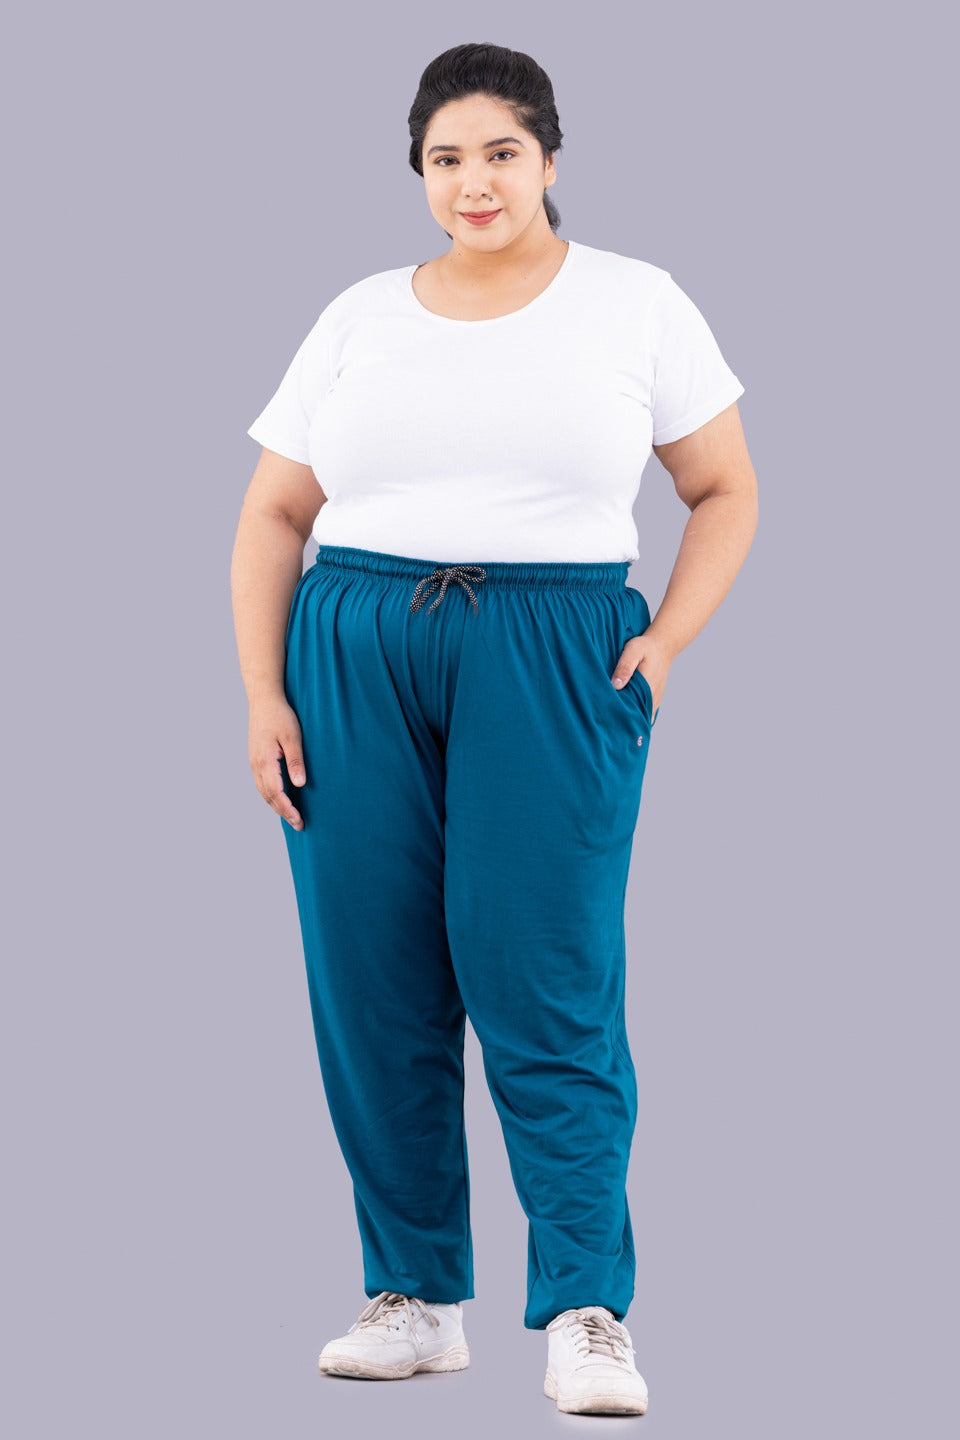 Plus Size Cotton Track Pants For Women - Teal Blue